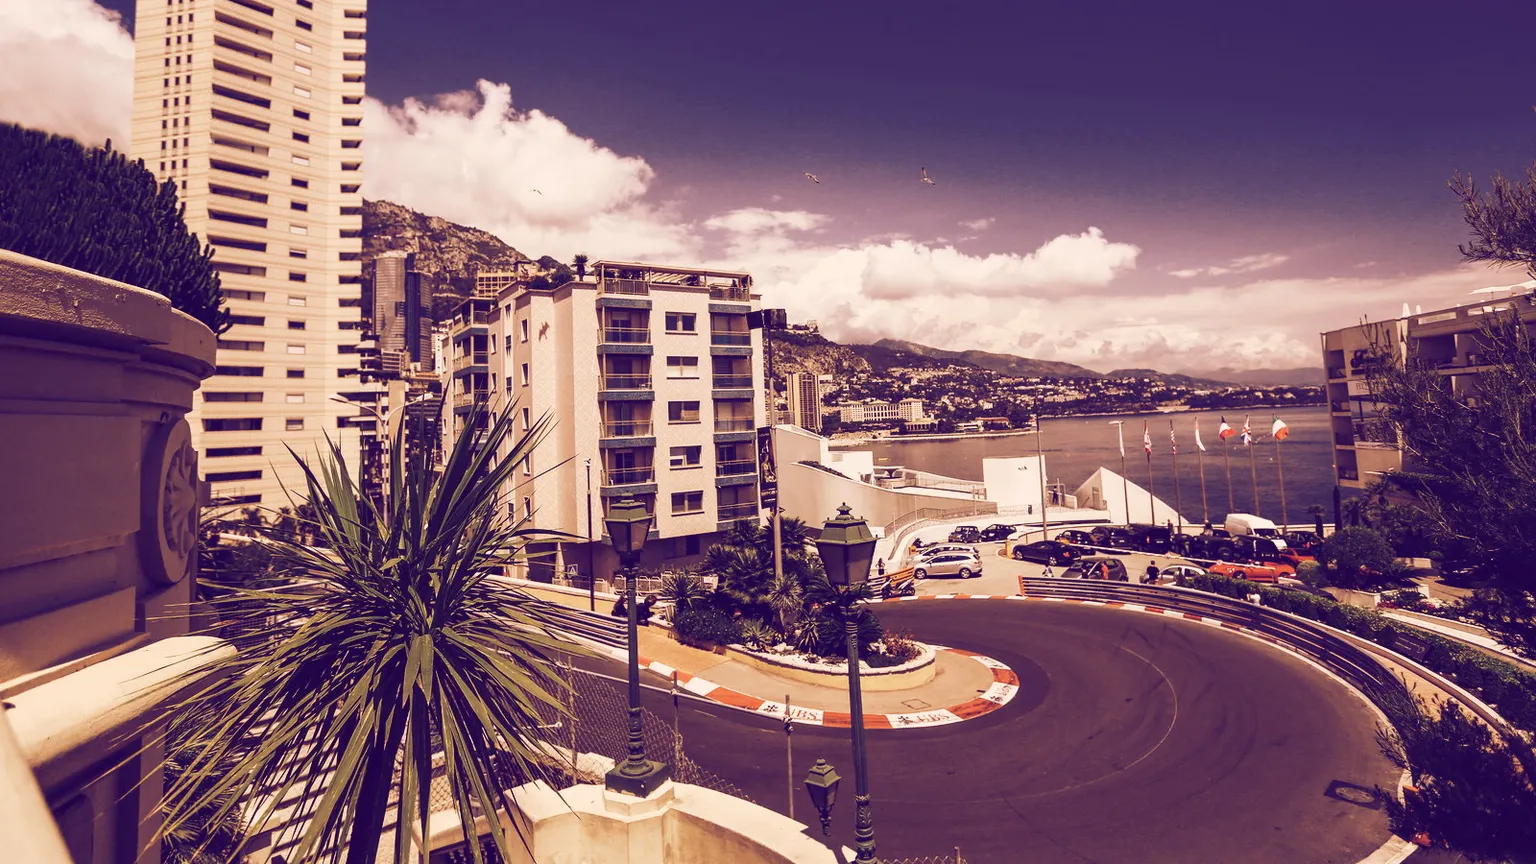 The real Circuit de Monaco. Image: Shutterstock